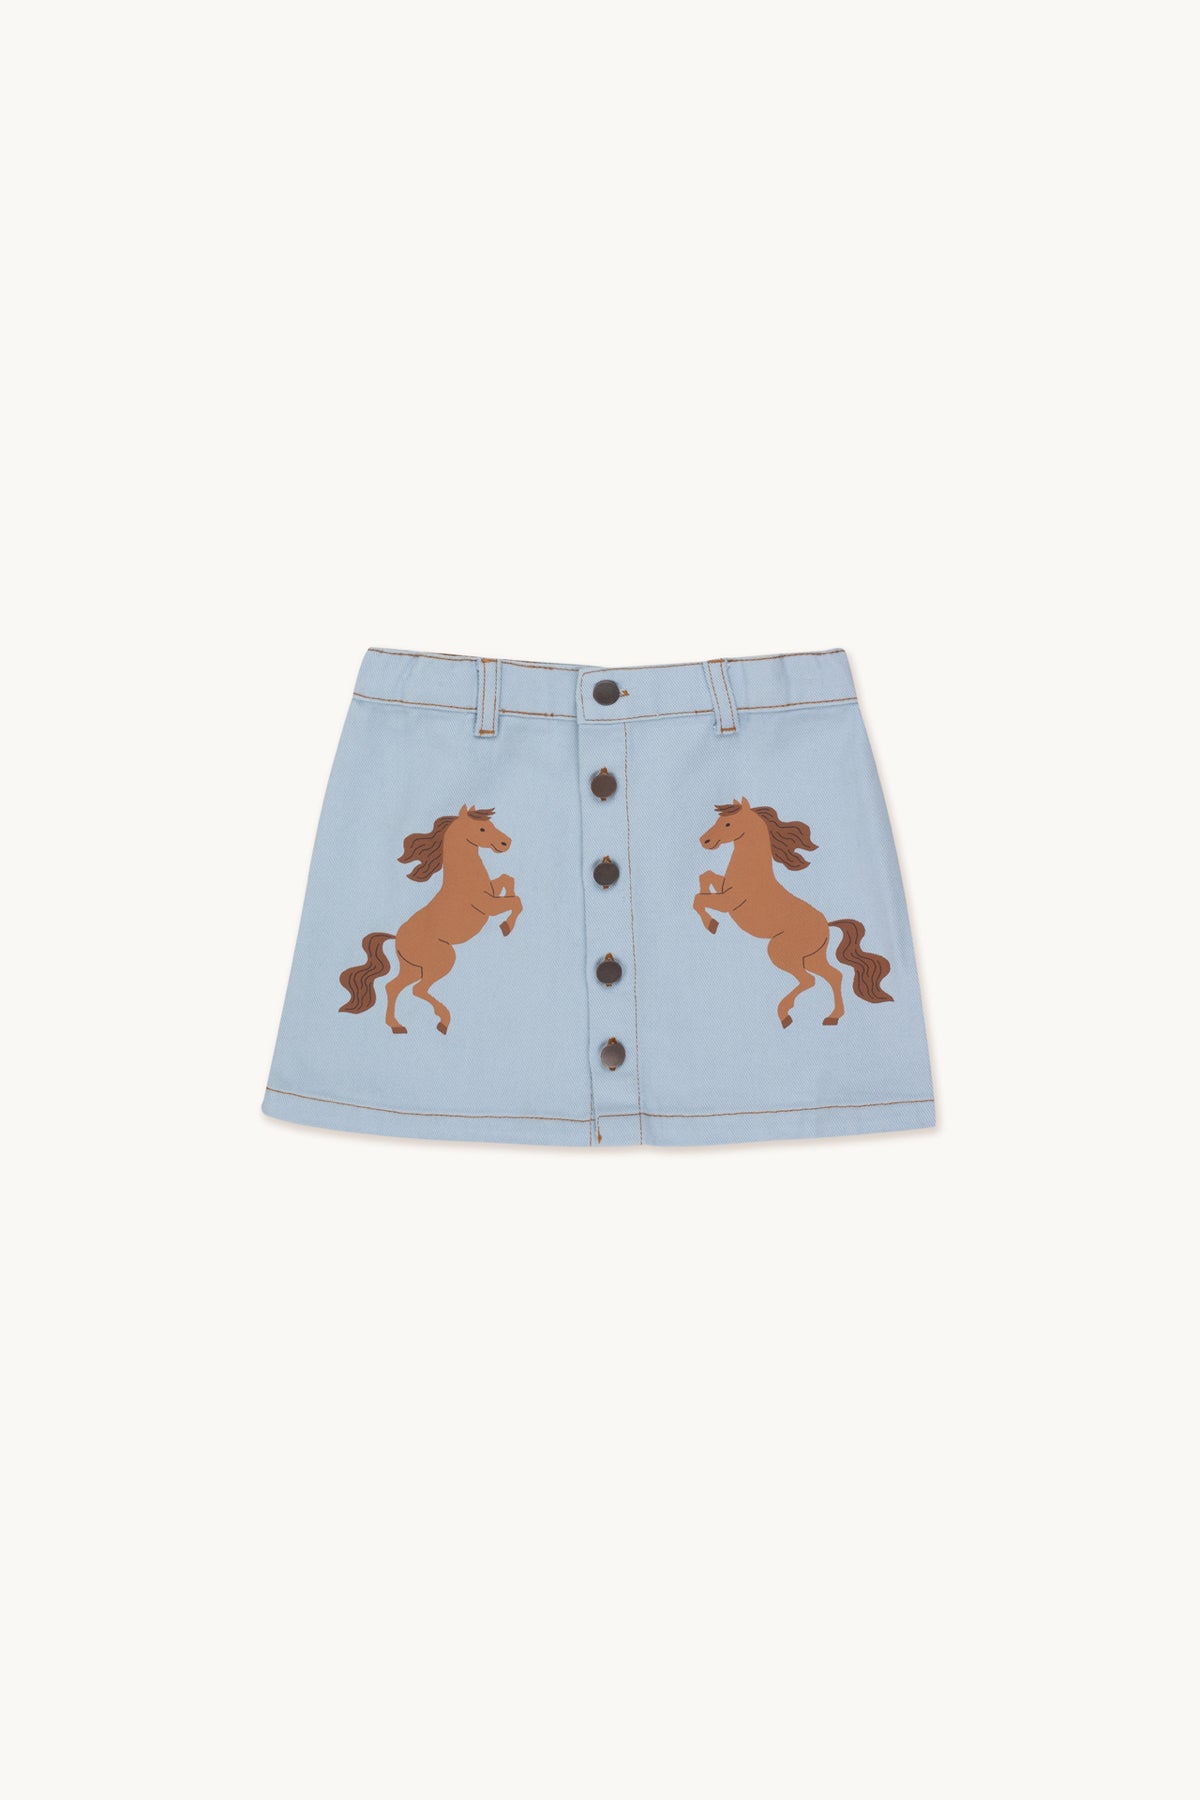 Tiny Cottons - horses skirt - blue grey